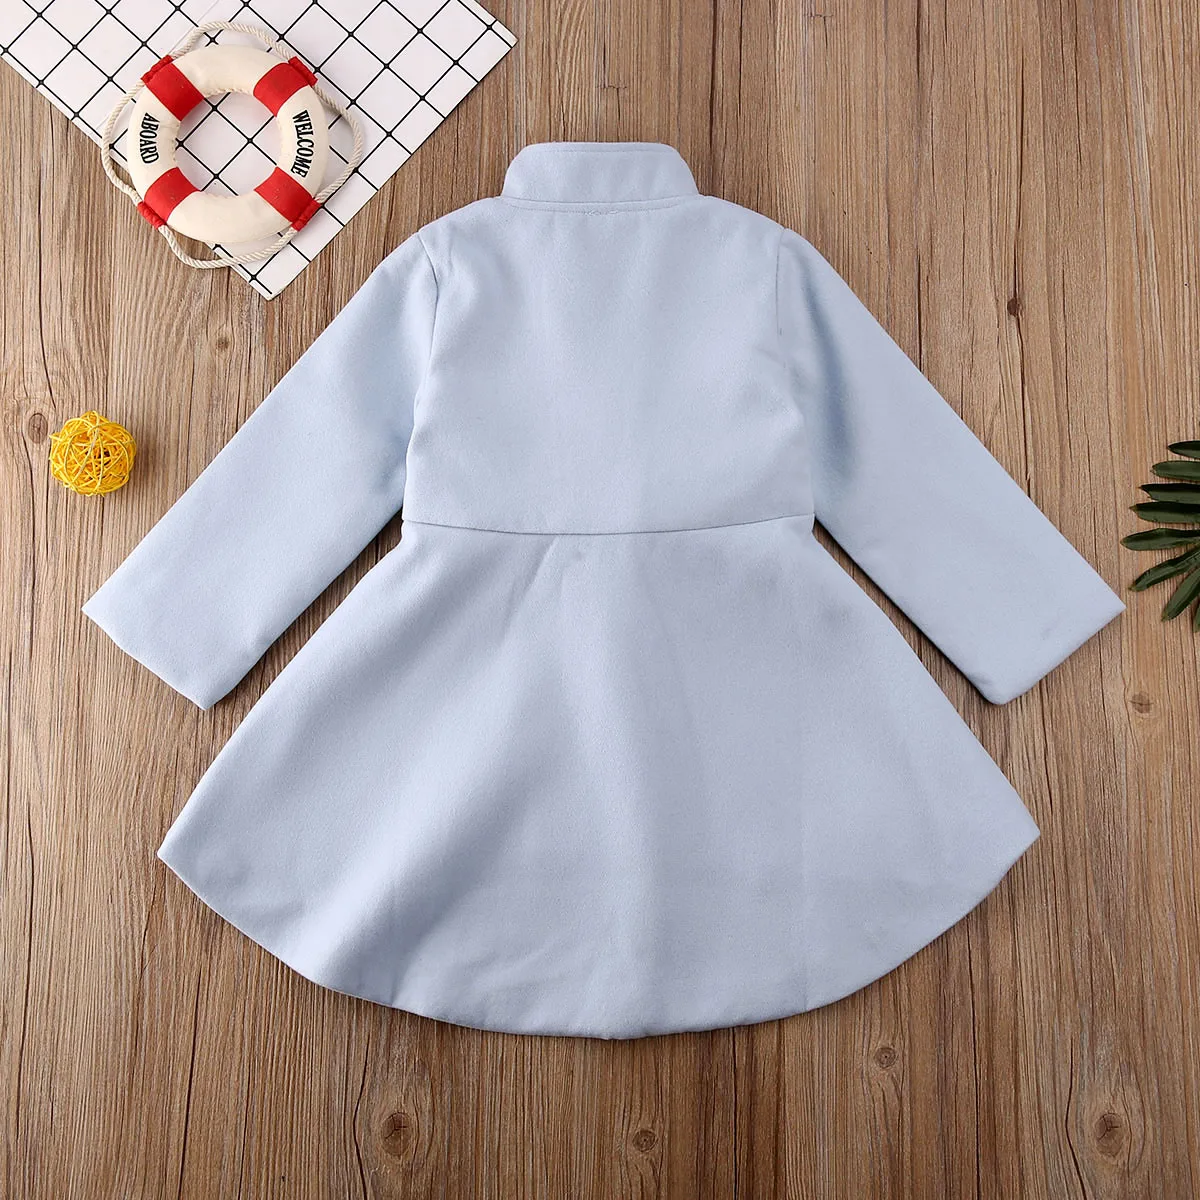 Baby Spring Autumn Clothing Kids Trench Elegant Toddler Baby Girl Outerwear Long Dress Windbreaker Jacket Coat Winter 1-5Y